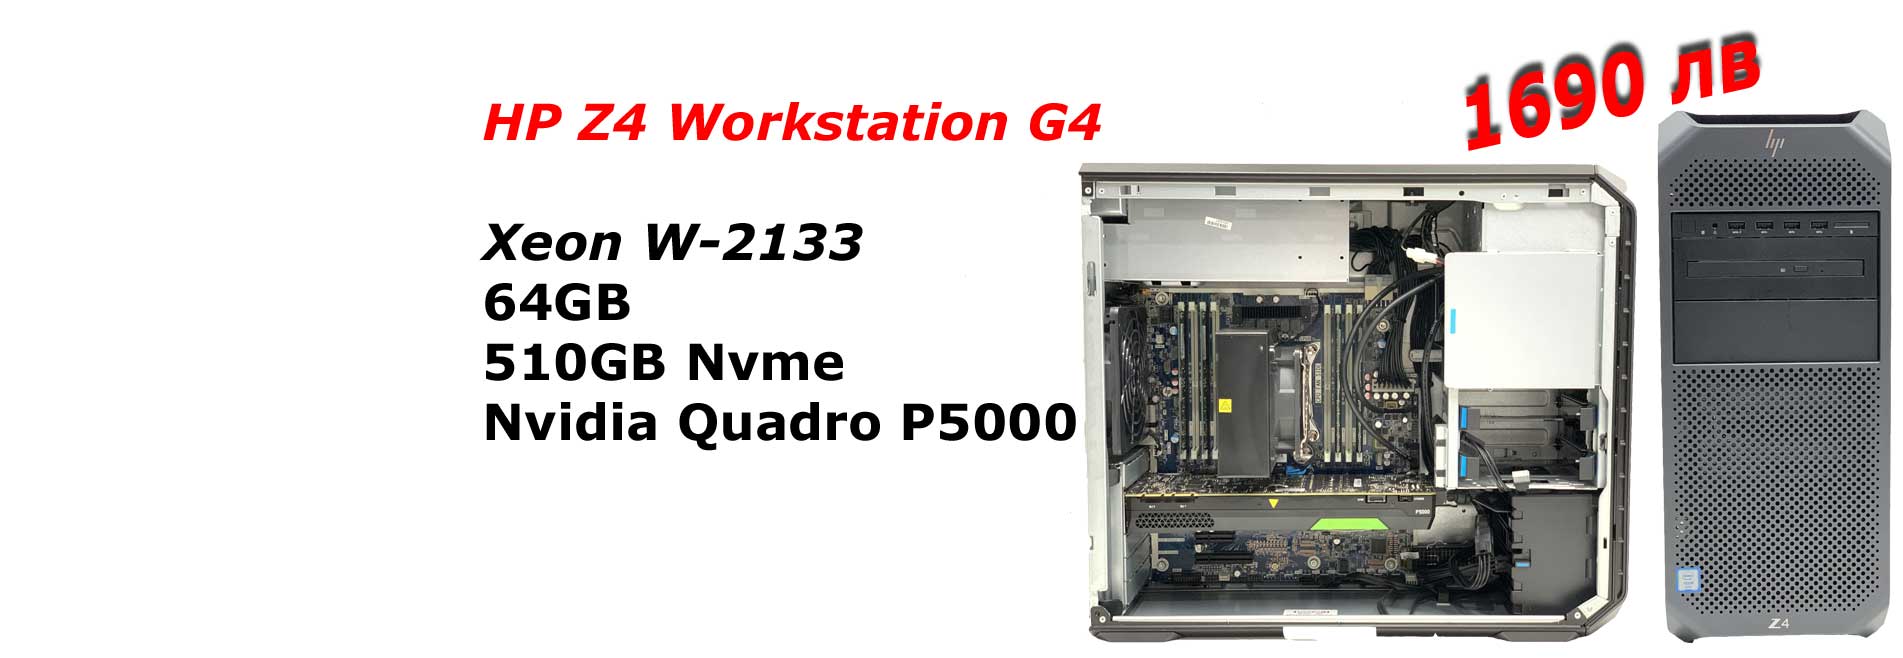 HP Z4 Workstation G4